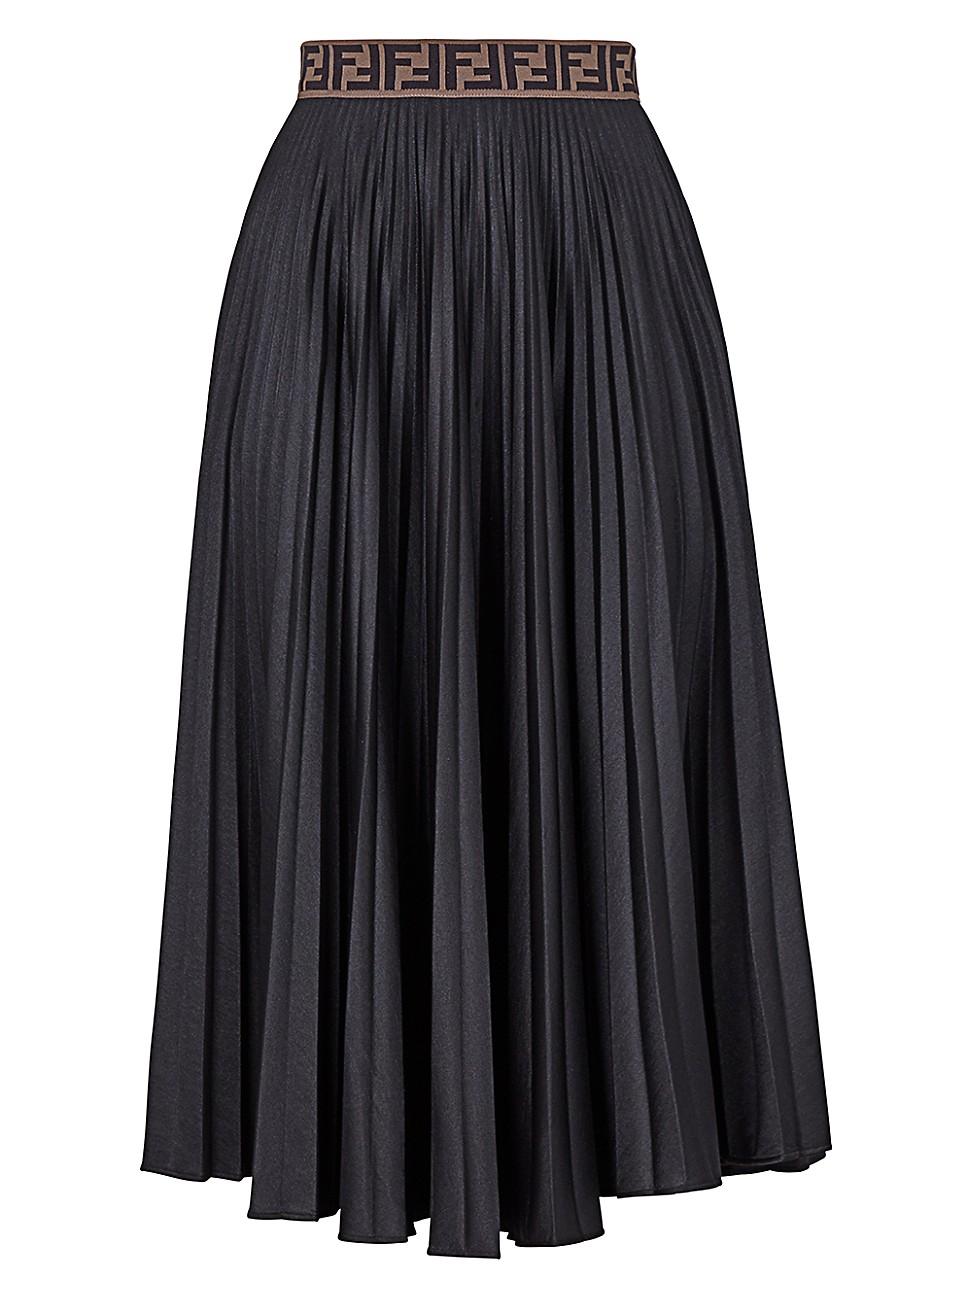 Fendi Cotton Ff Motif Pleated Skirt in Black | Lyst